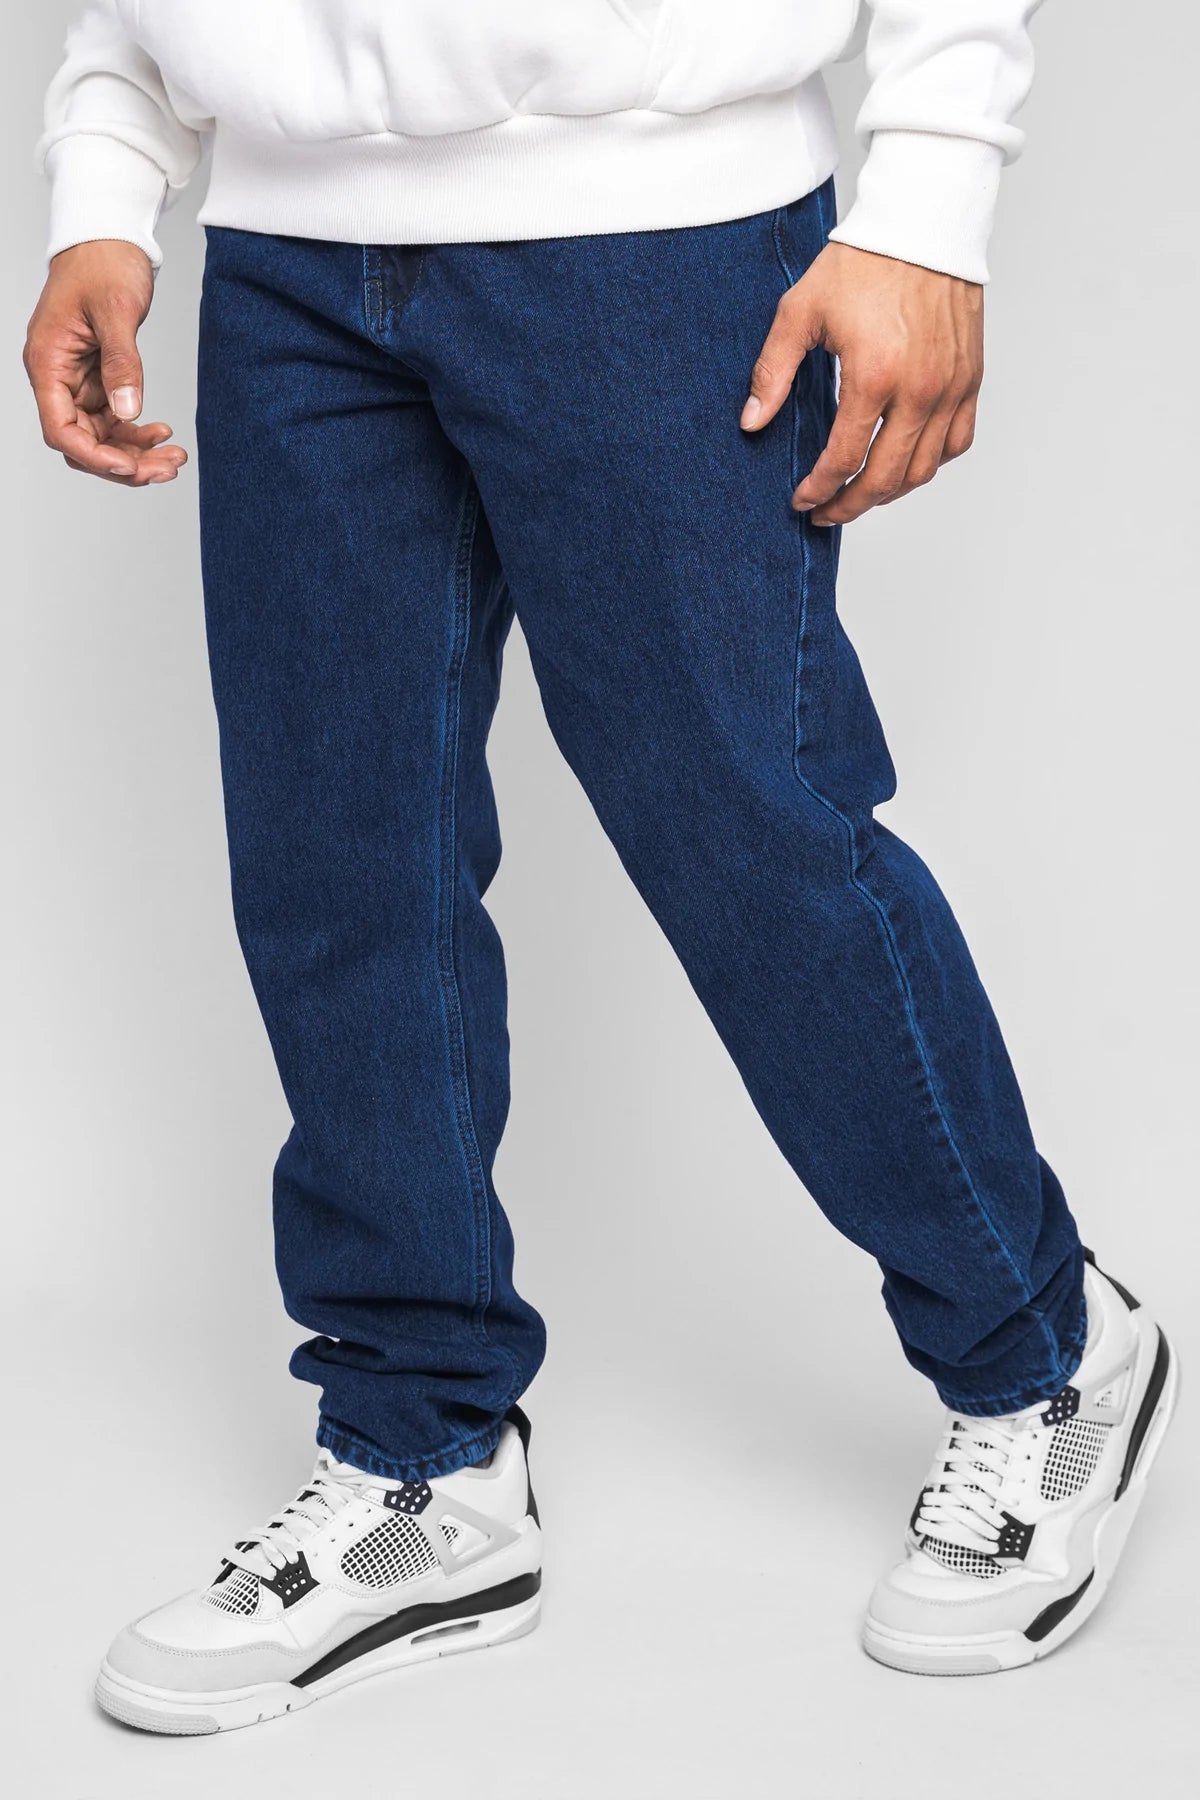 Dropsize Loose Fit Dark Blue Jeans